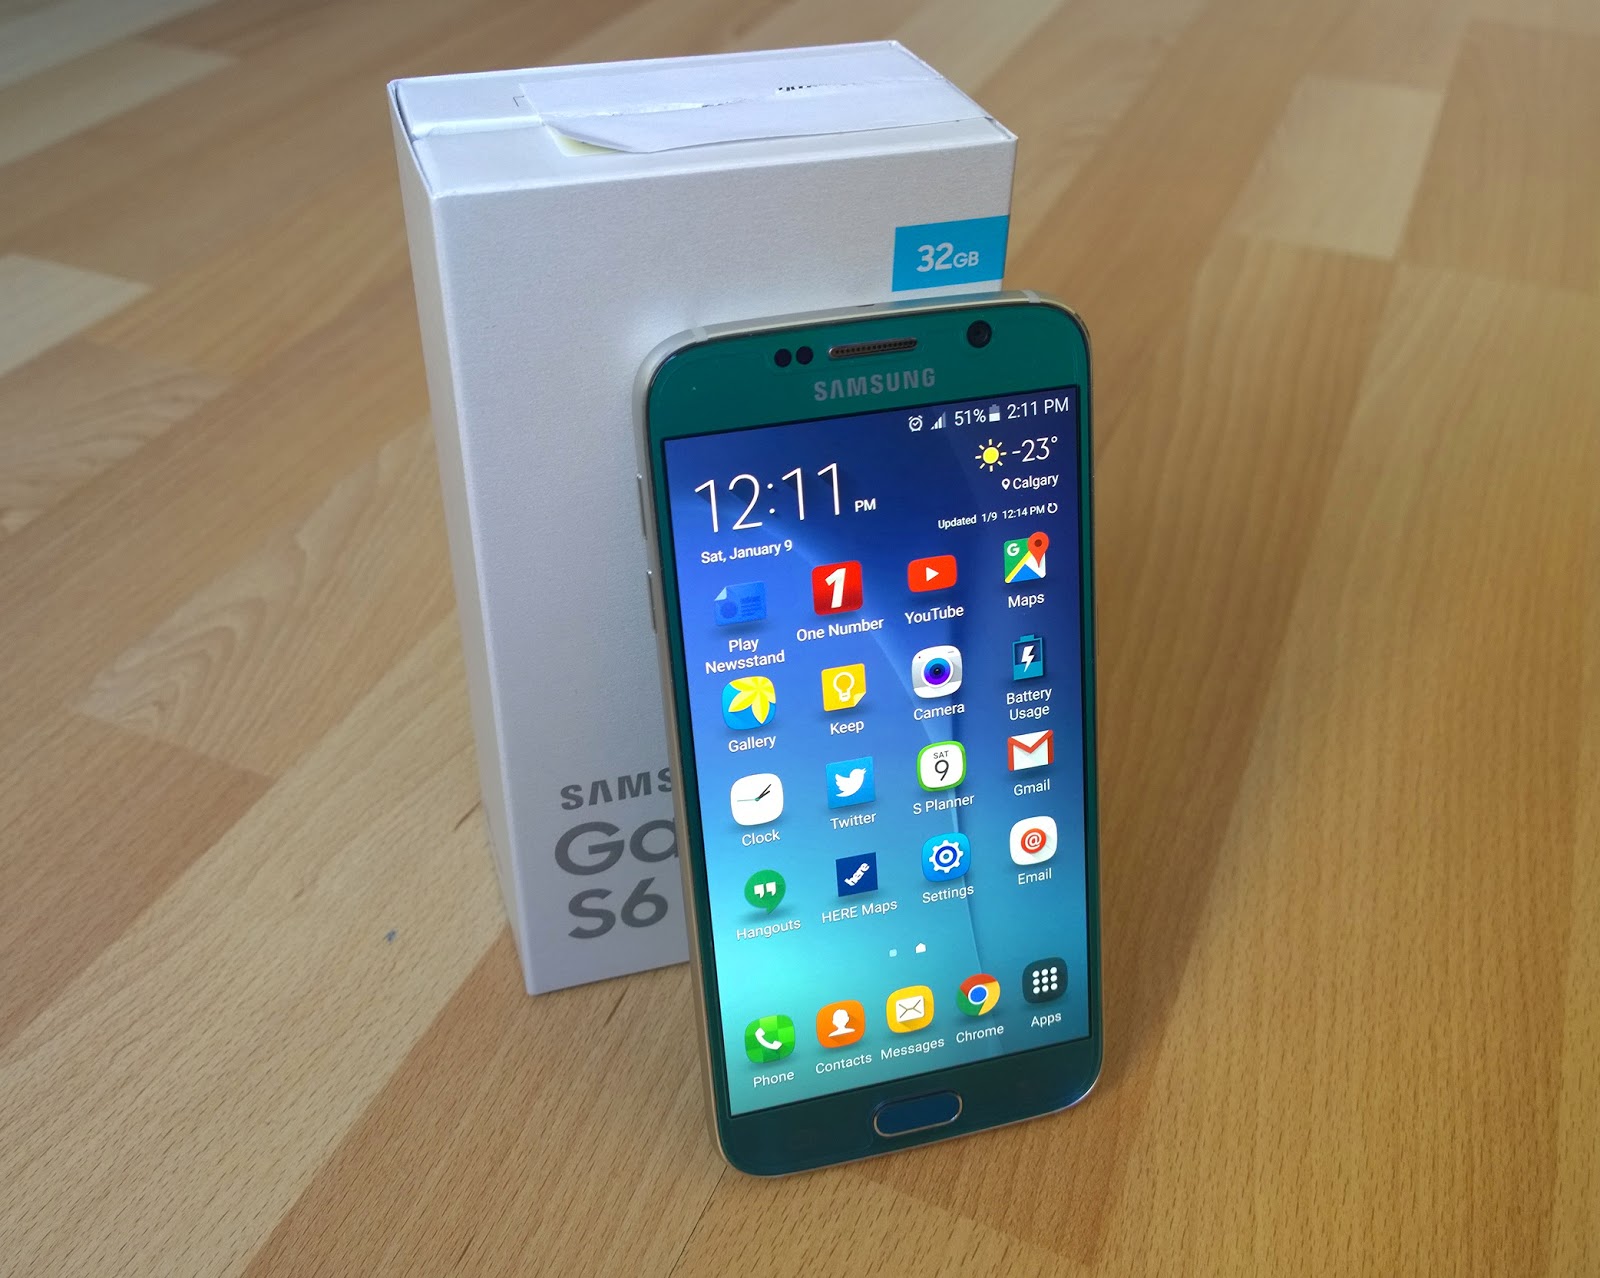 Samsung Galaxy S6 SM-G920F 32GB Smartphone G920F-32GB-BLK B&H